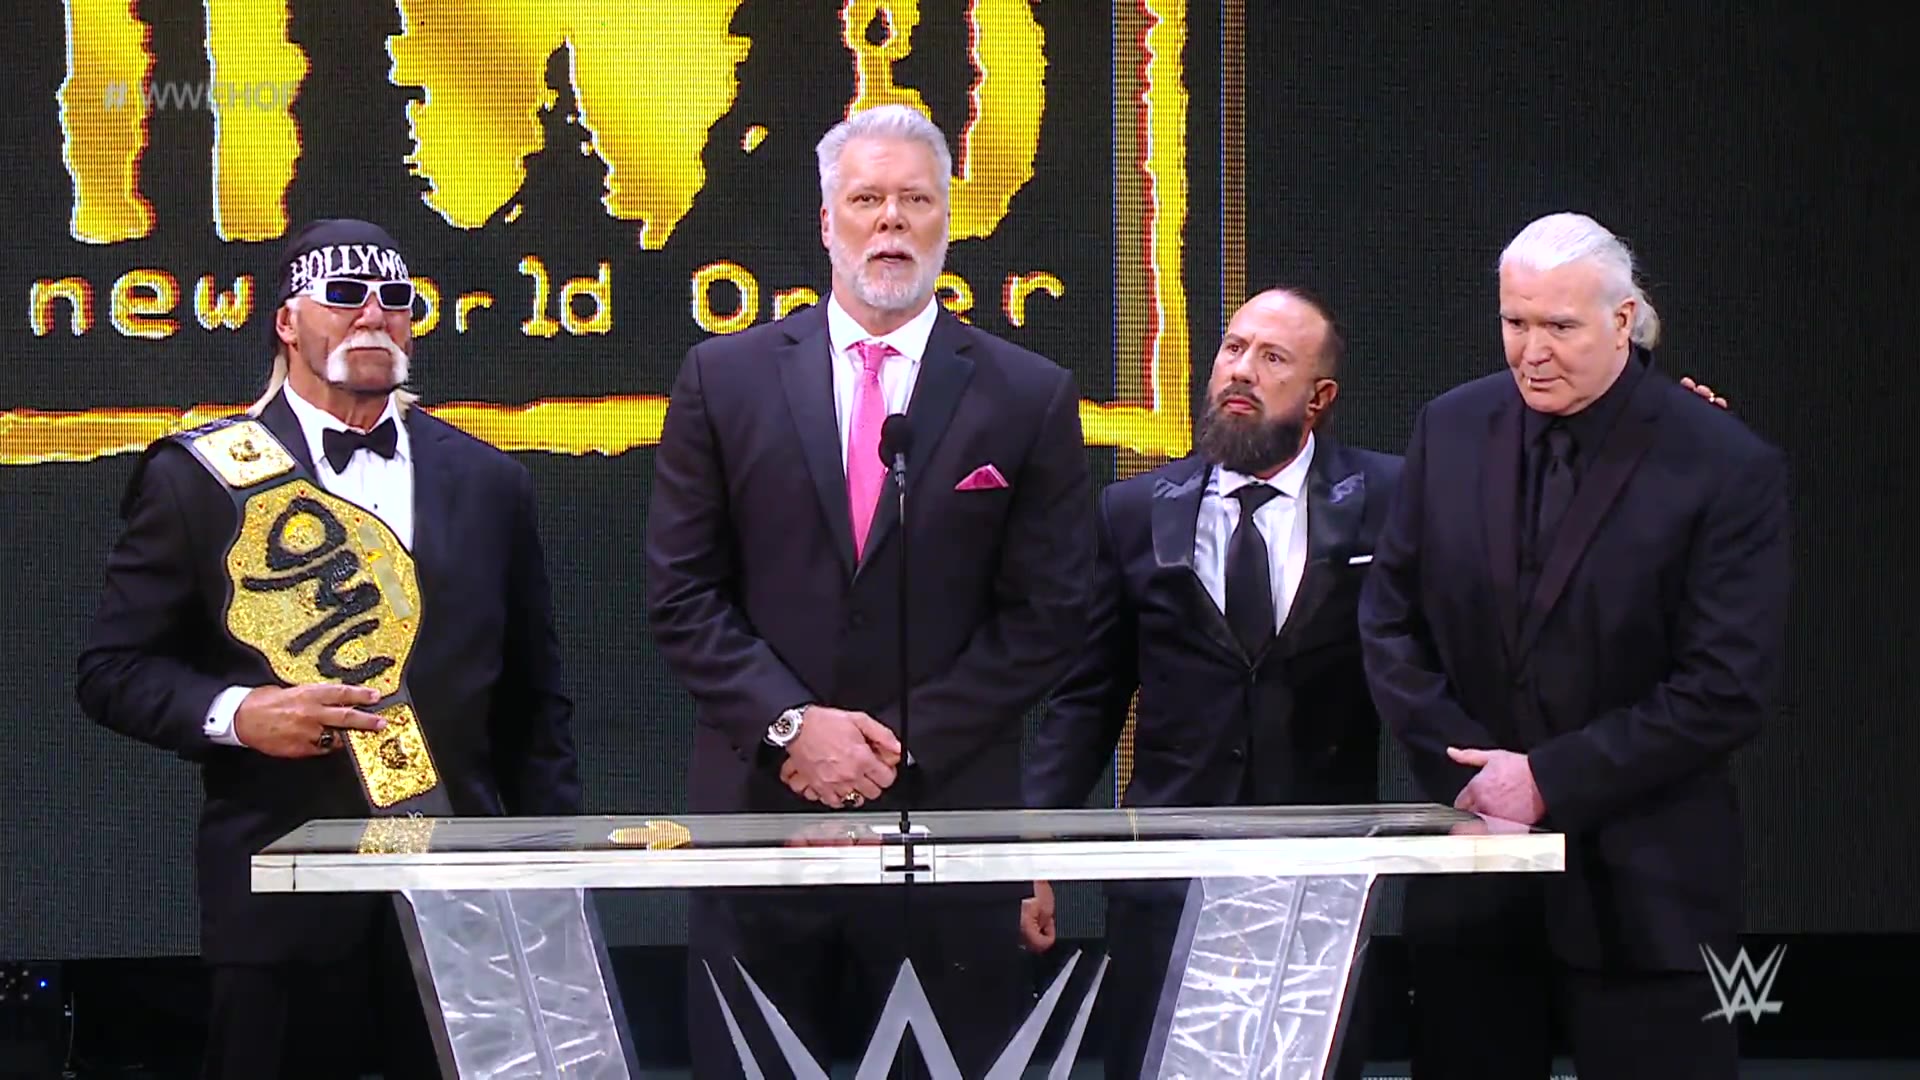 Watch WWE Raw Highlight nWo Hall of Fame Induction Speech [FULL] "nWo